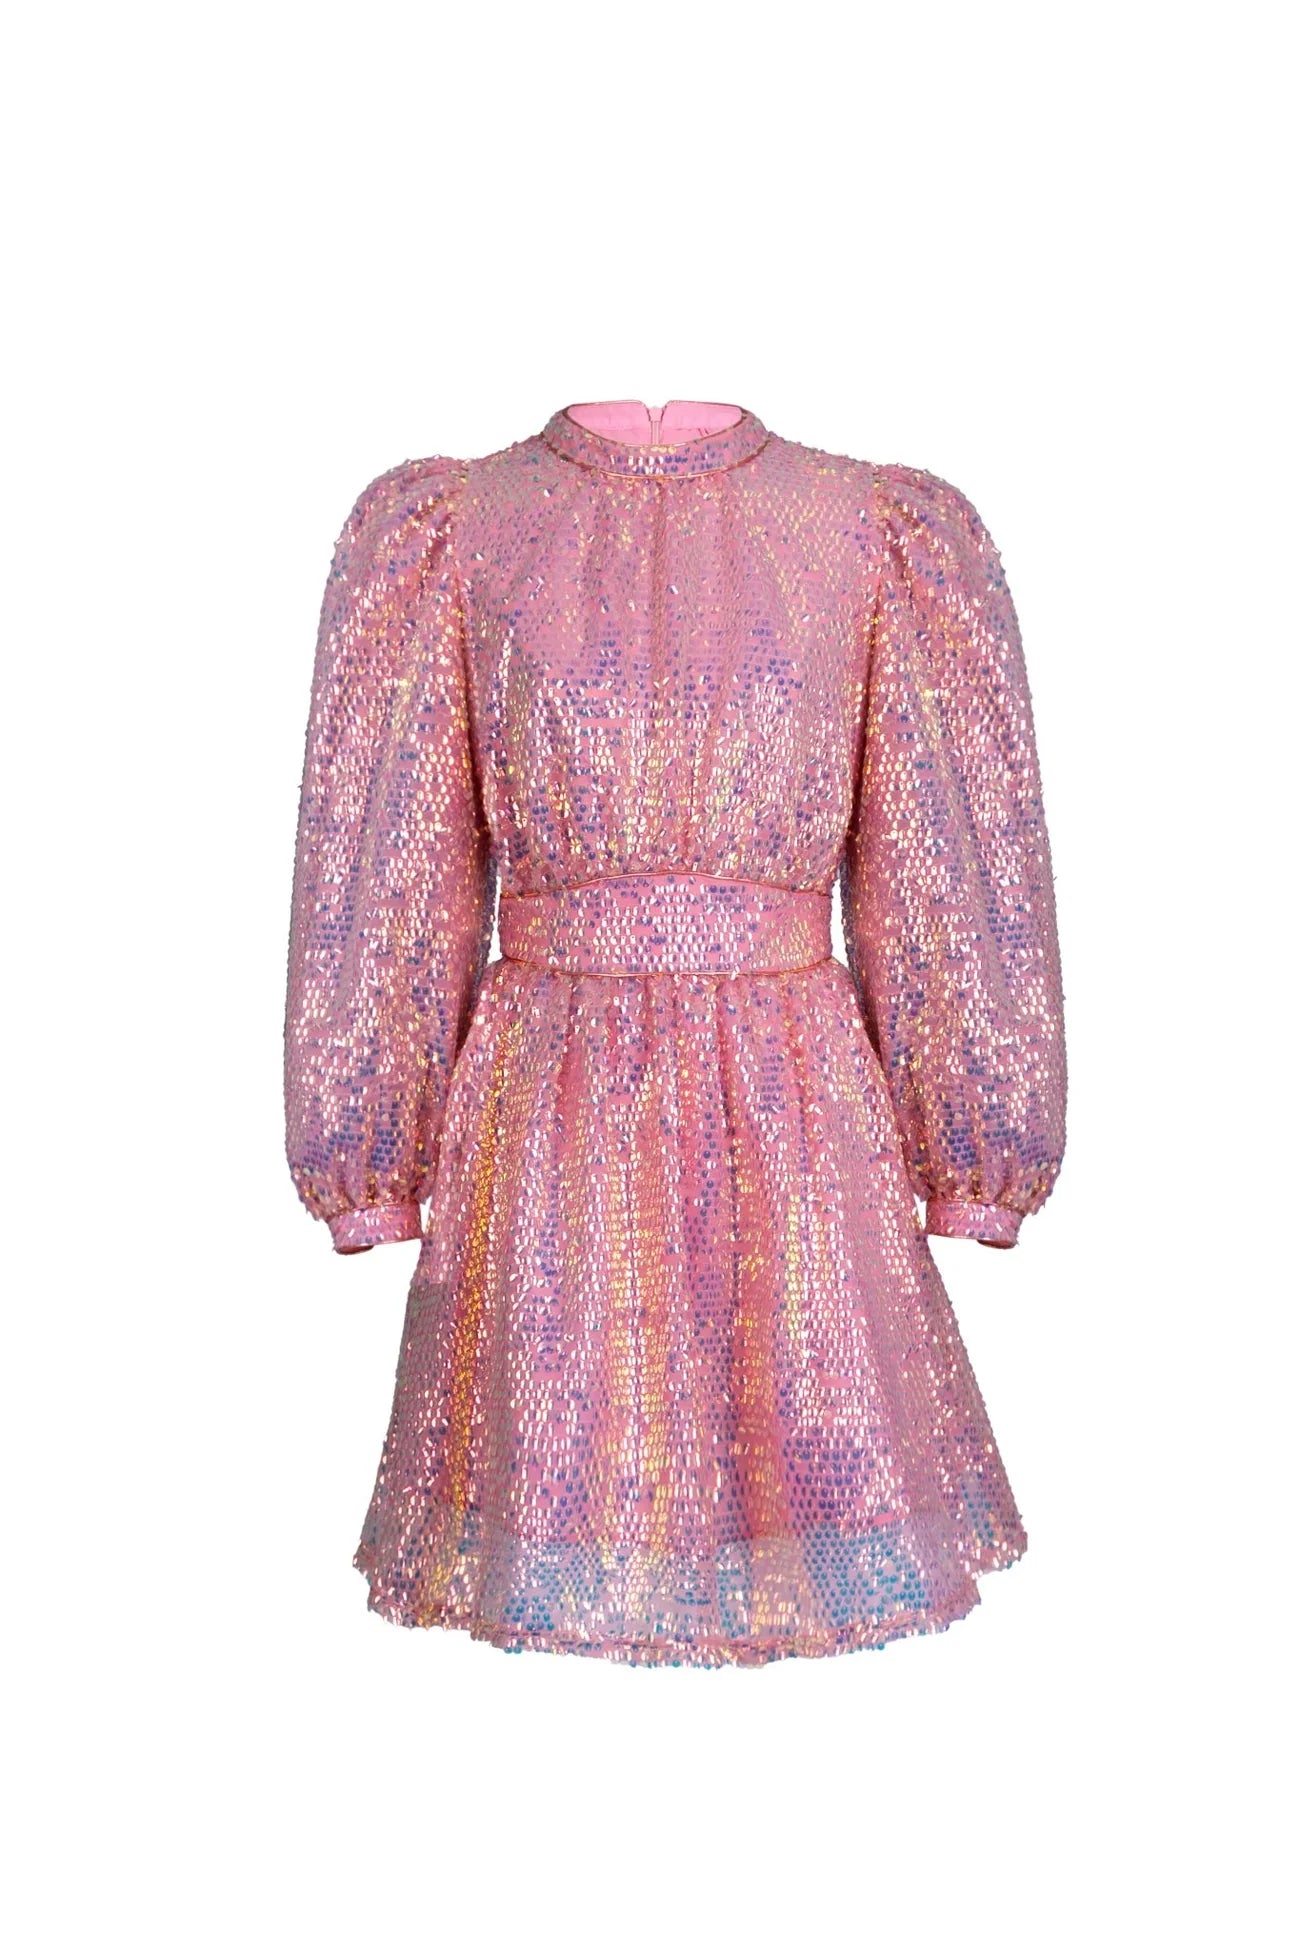 Ezili Pink sparkle sequence mini dress